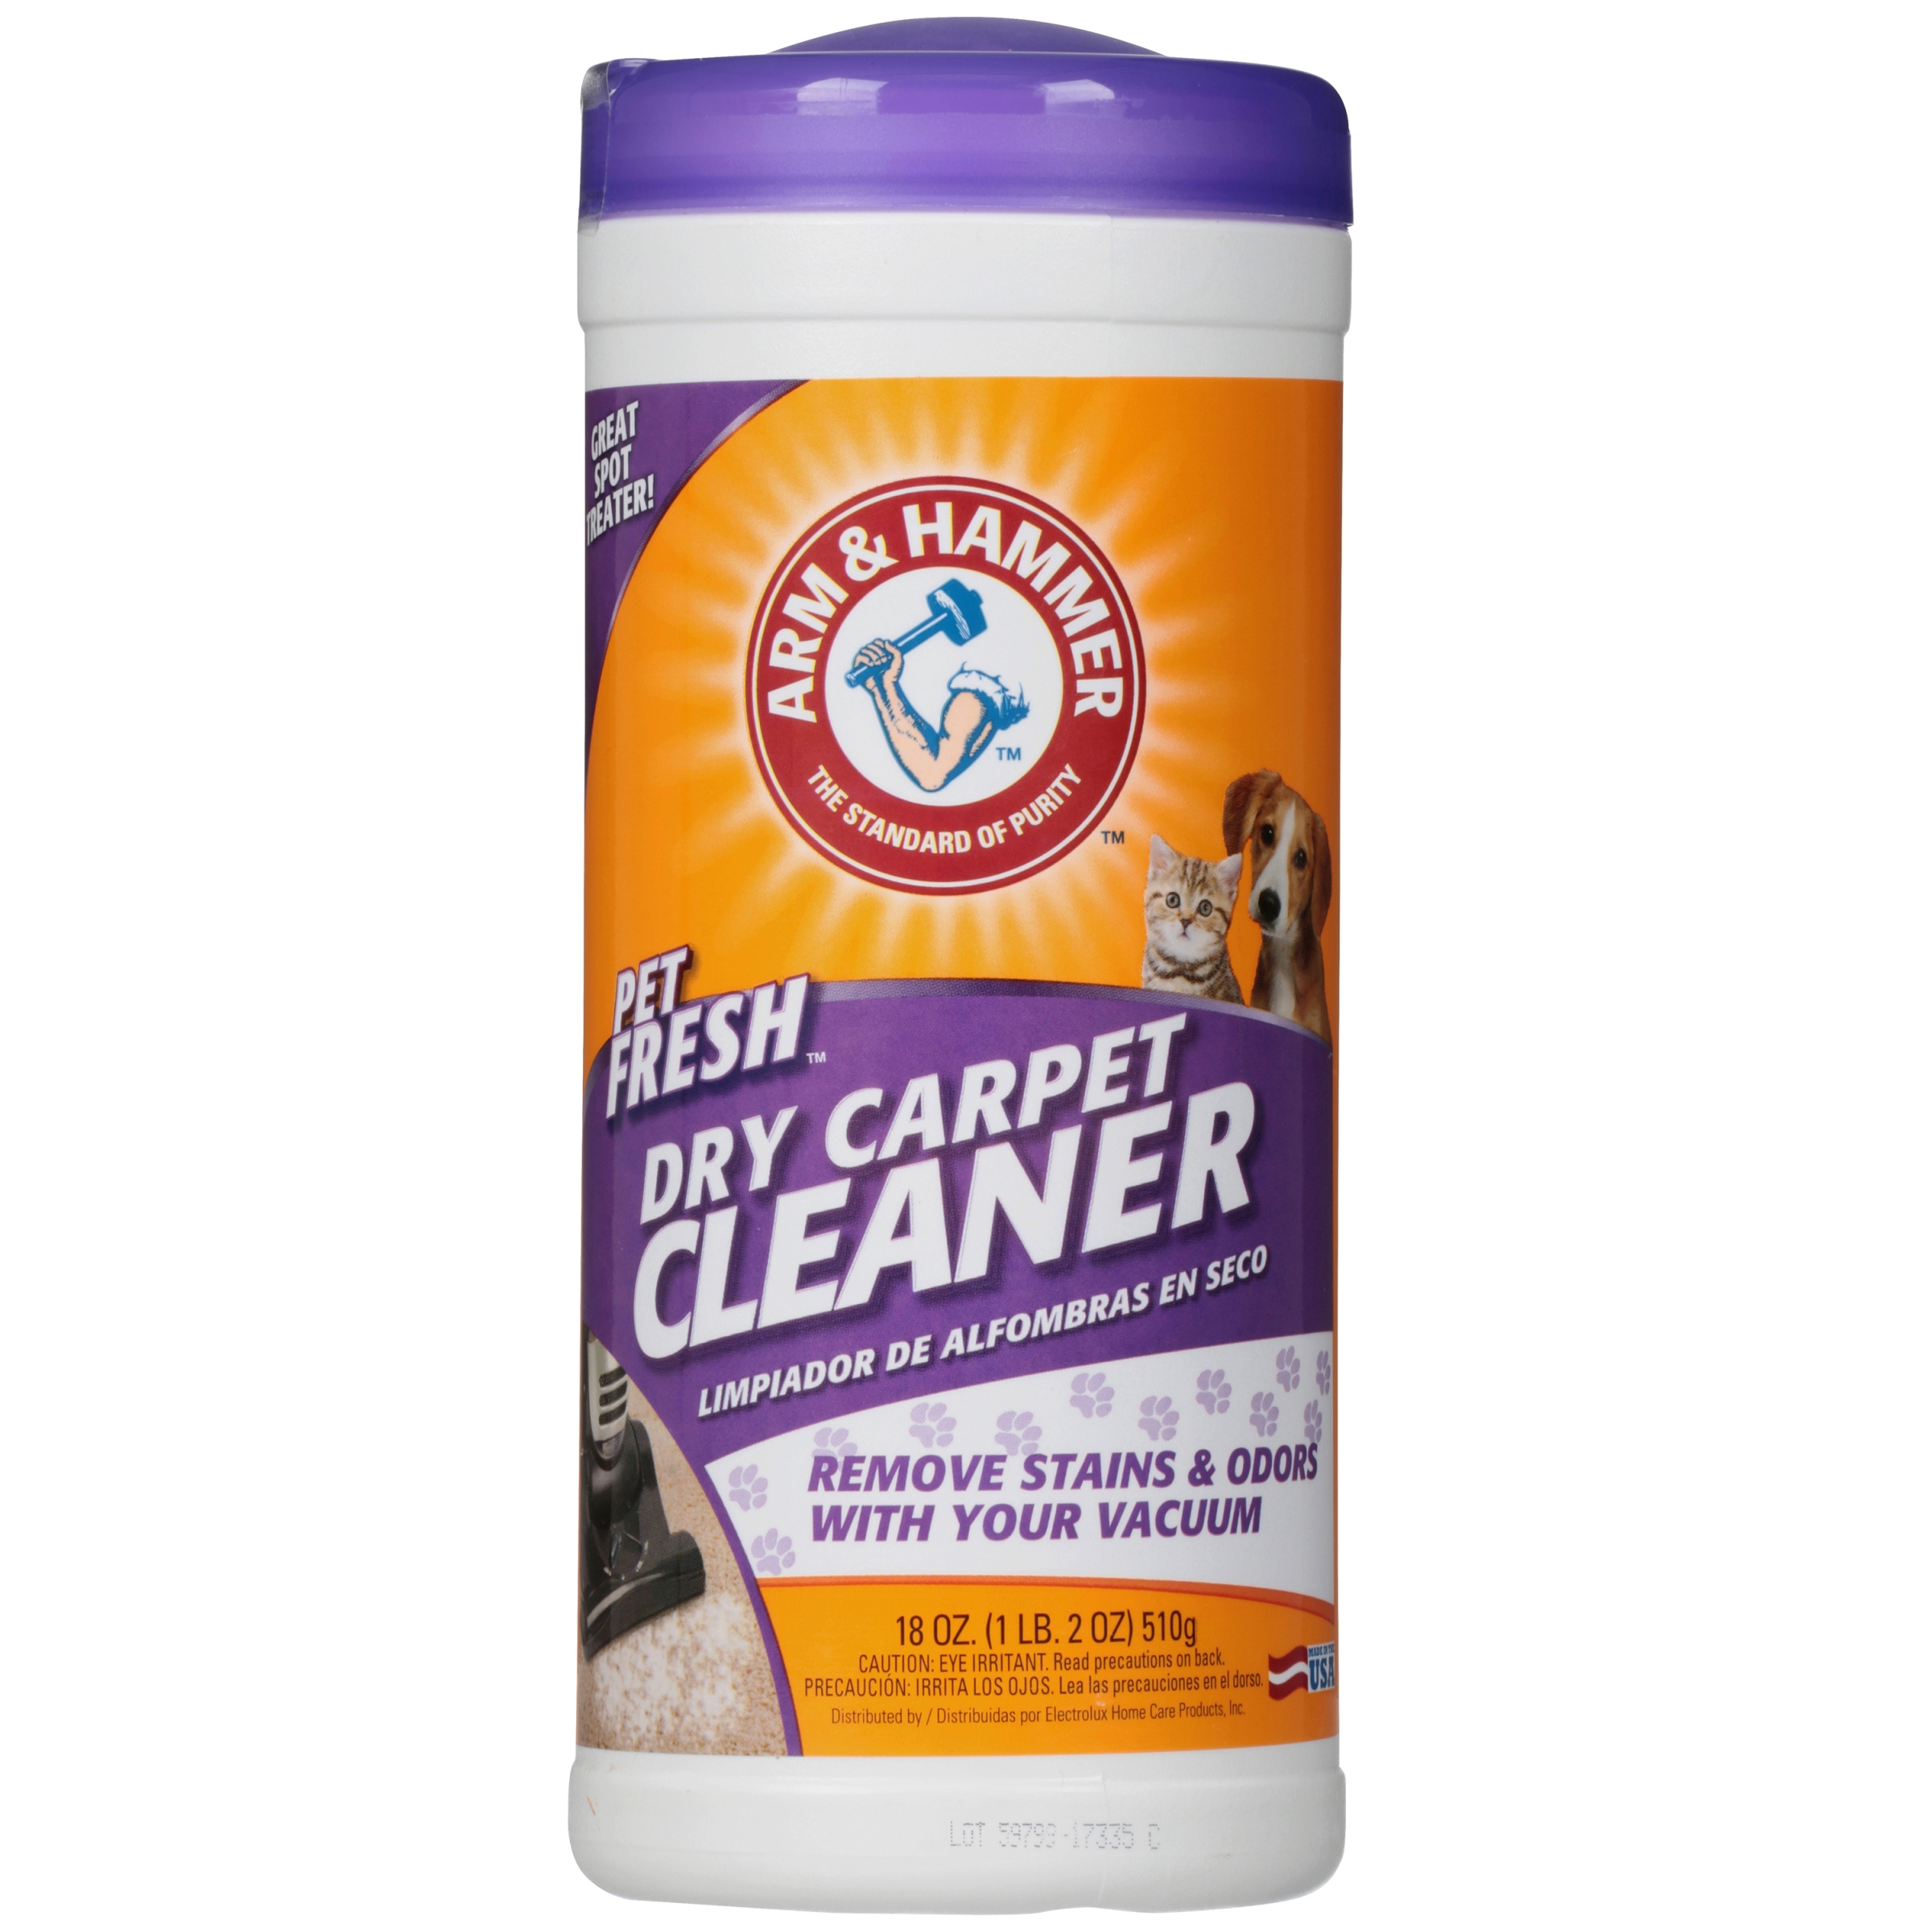 Arm & Hammer Pet Fresh Dry Carpet Cleaner - image 1 of 3